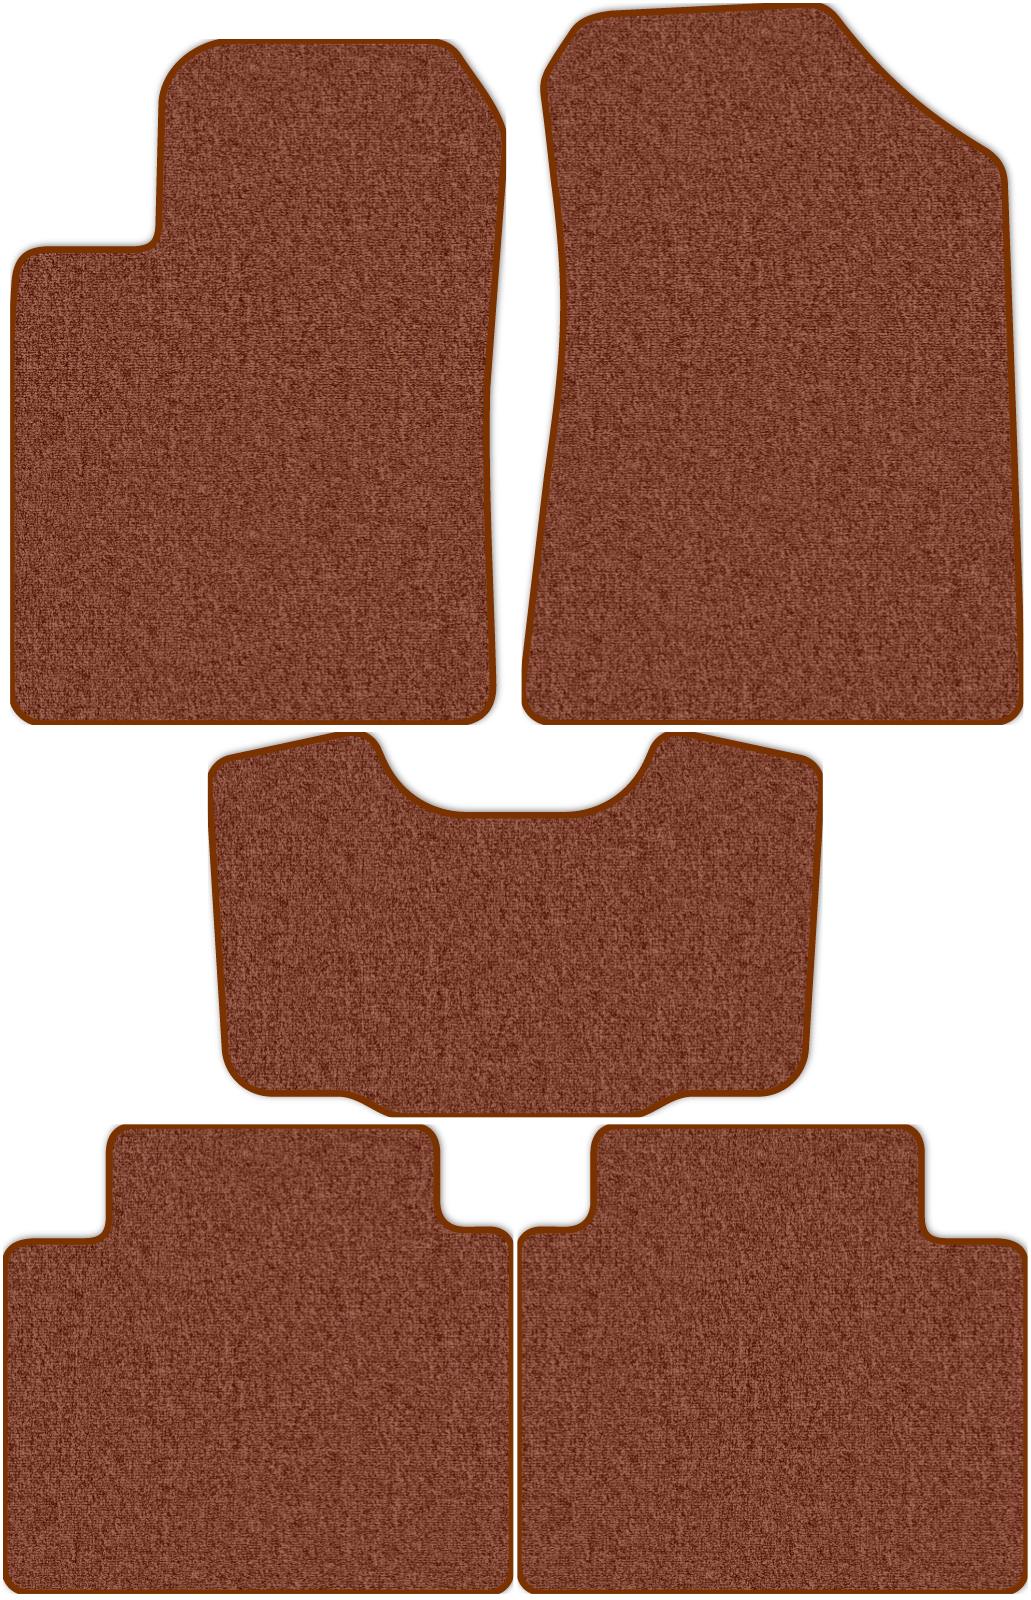 

Коврики в салон Комфорт для Hyundai Grandeur 4 2005 - 2009, 5 шт. коричневый, текстиль, 2406-S5NT-D